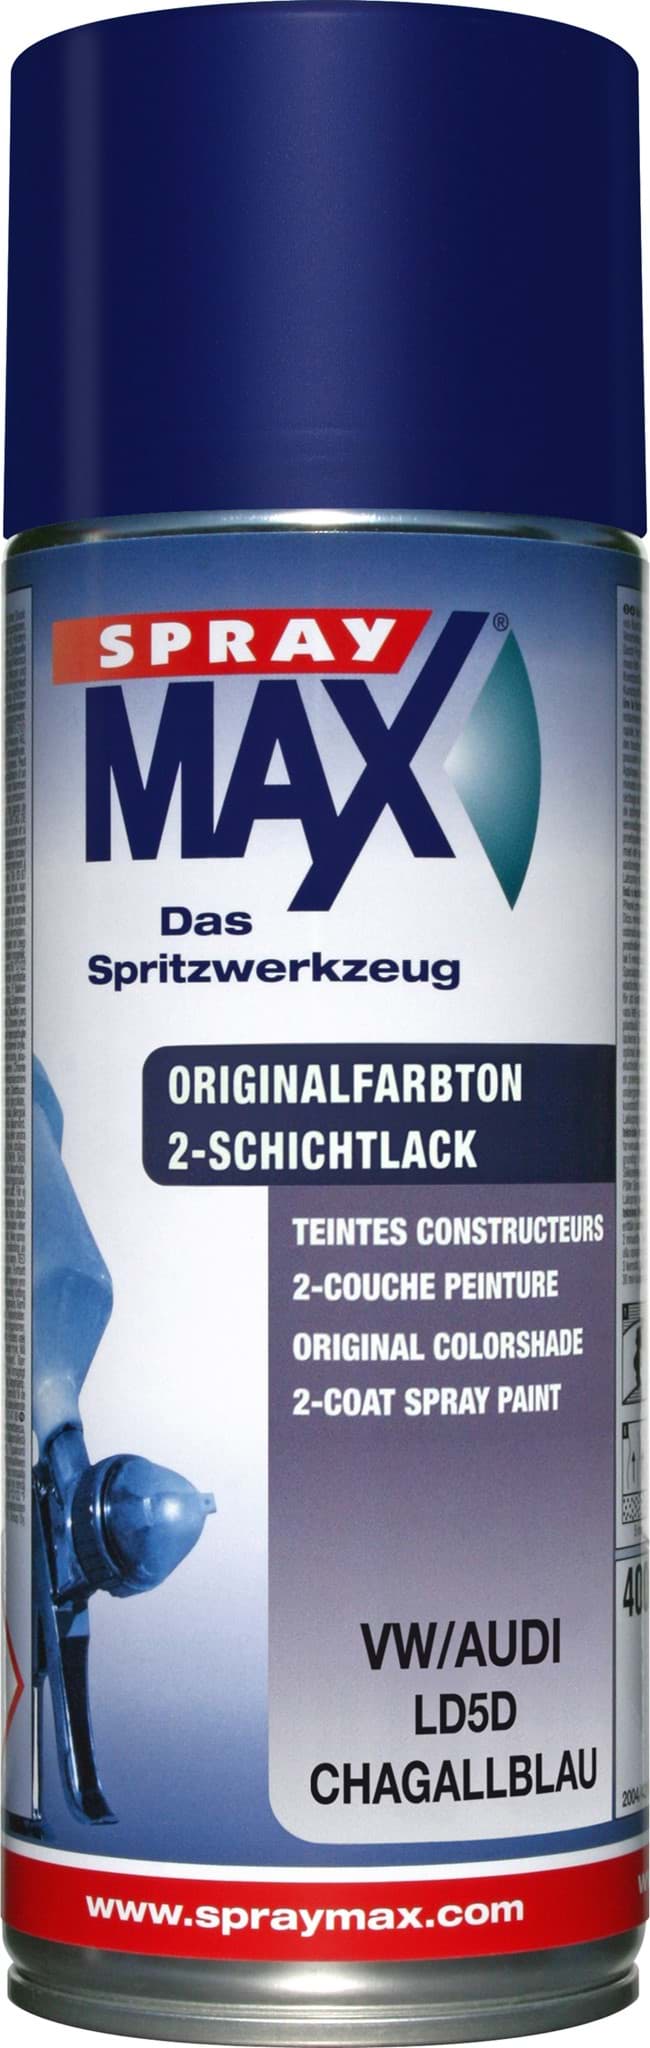 Afbeelding van SprayMax Originalfarbton für VW LD5D chagallblau